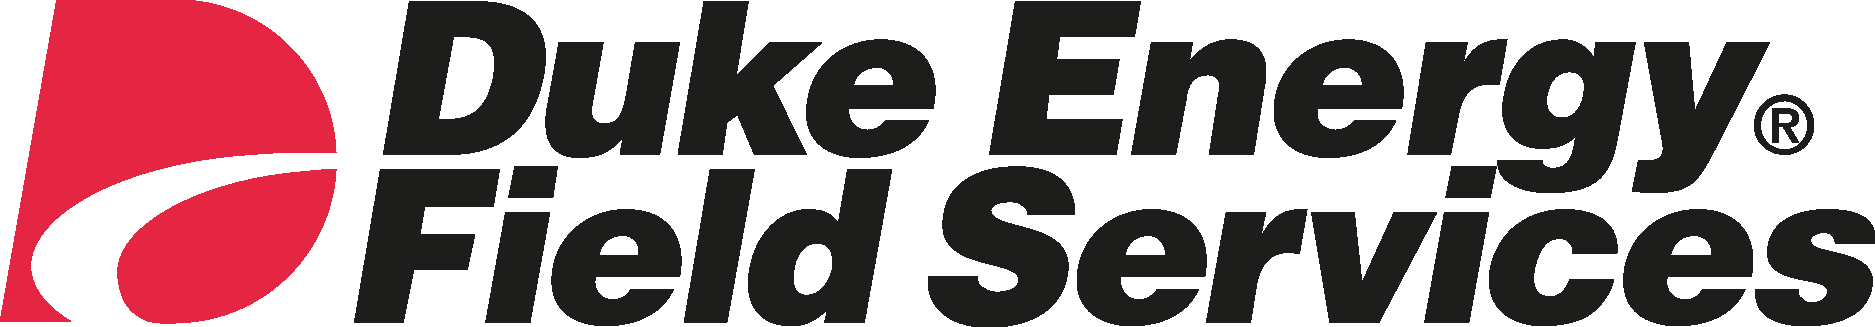 Duke Energy Field Services Logo Vector